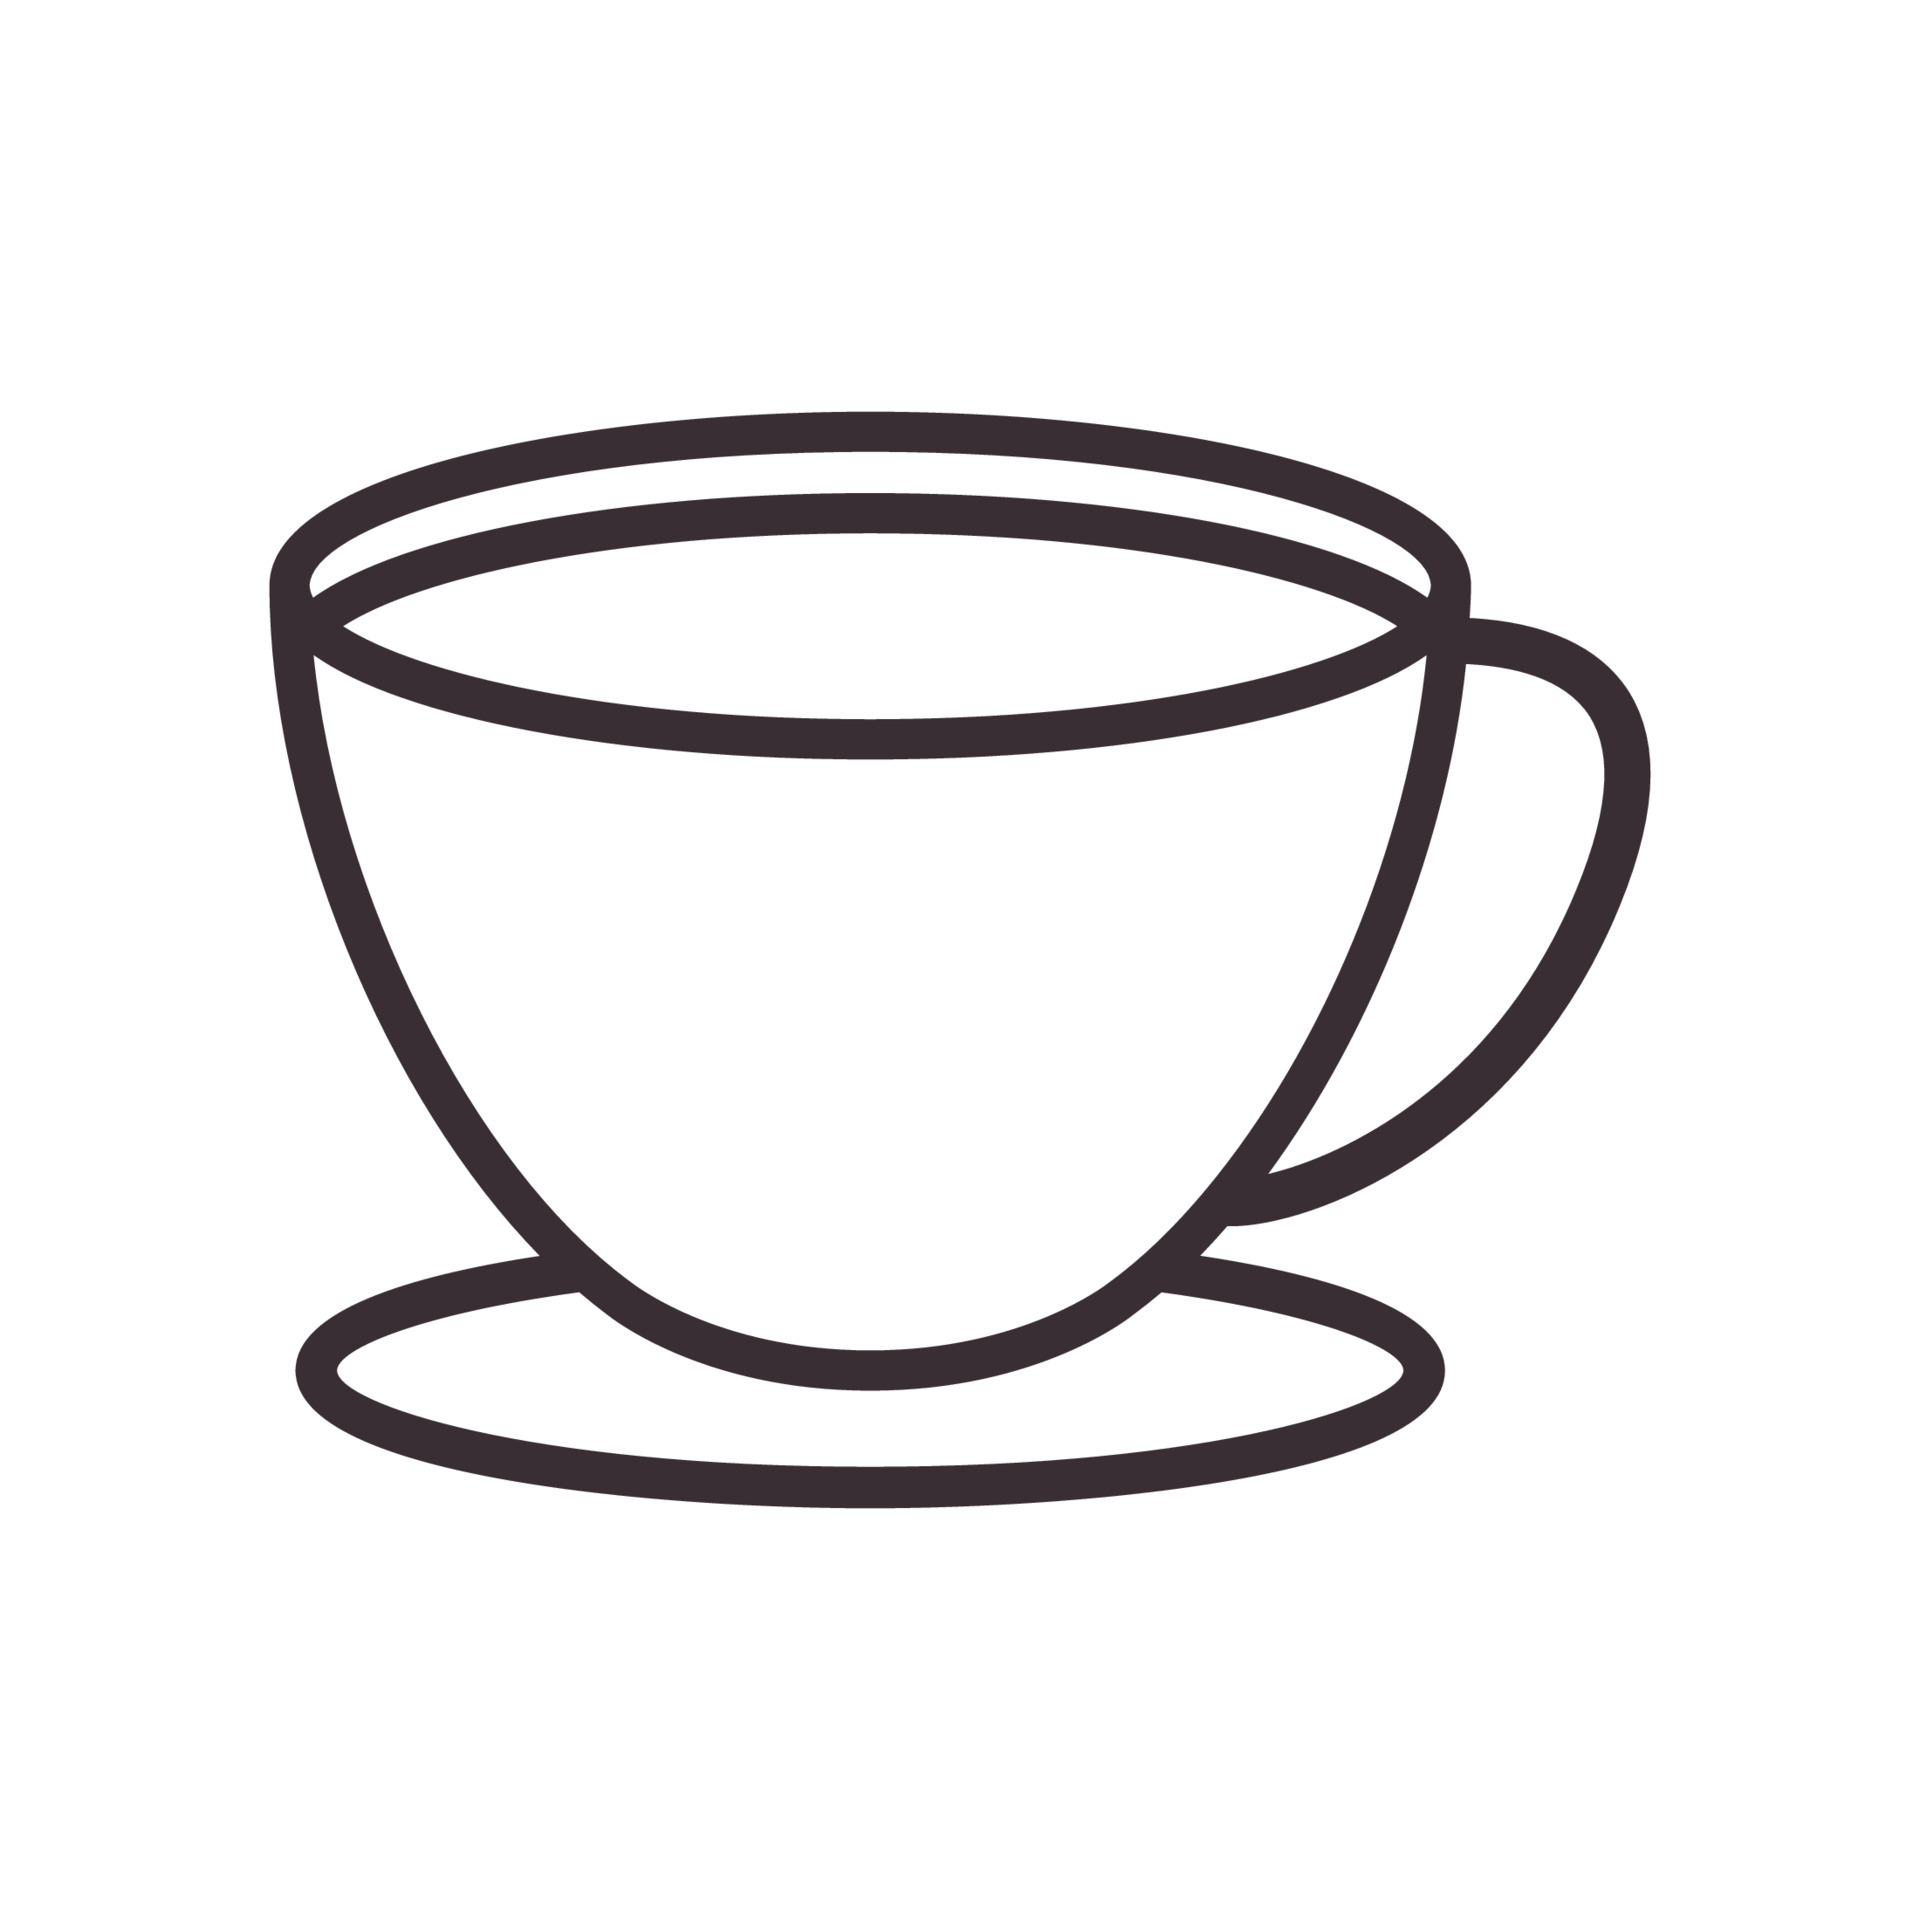 https://static.vecteezy.com/system/resources/previews/005/519/071/original/minimalist-line-cup-simple-logo-design-graphic-symbol-icon-sign-illustration-creative-idea-vector.jpg